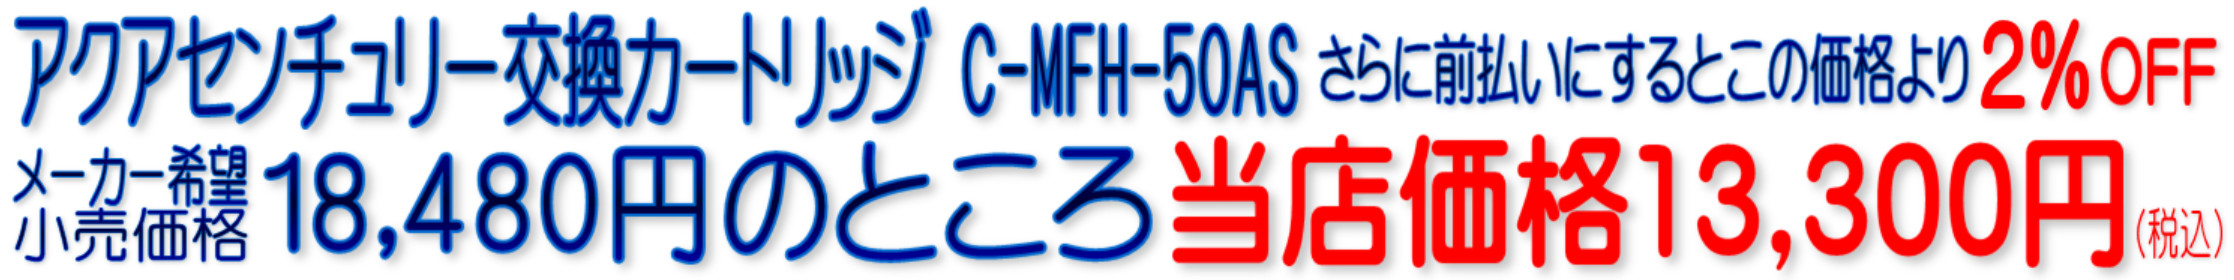 C-MFH-50AS